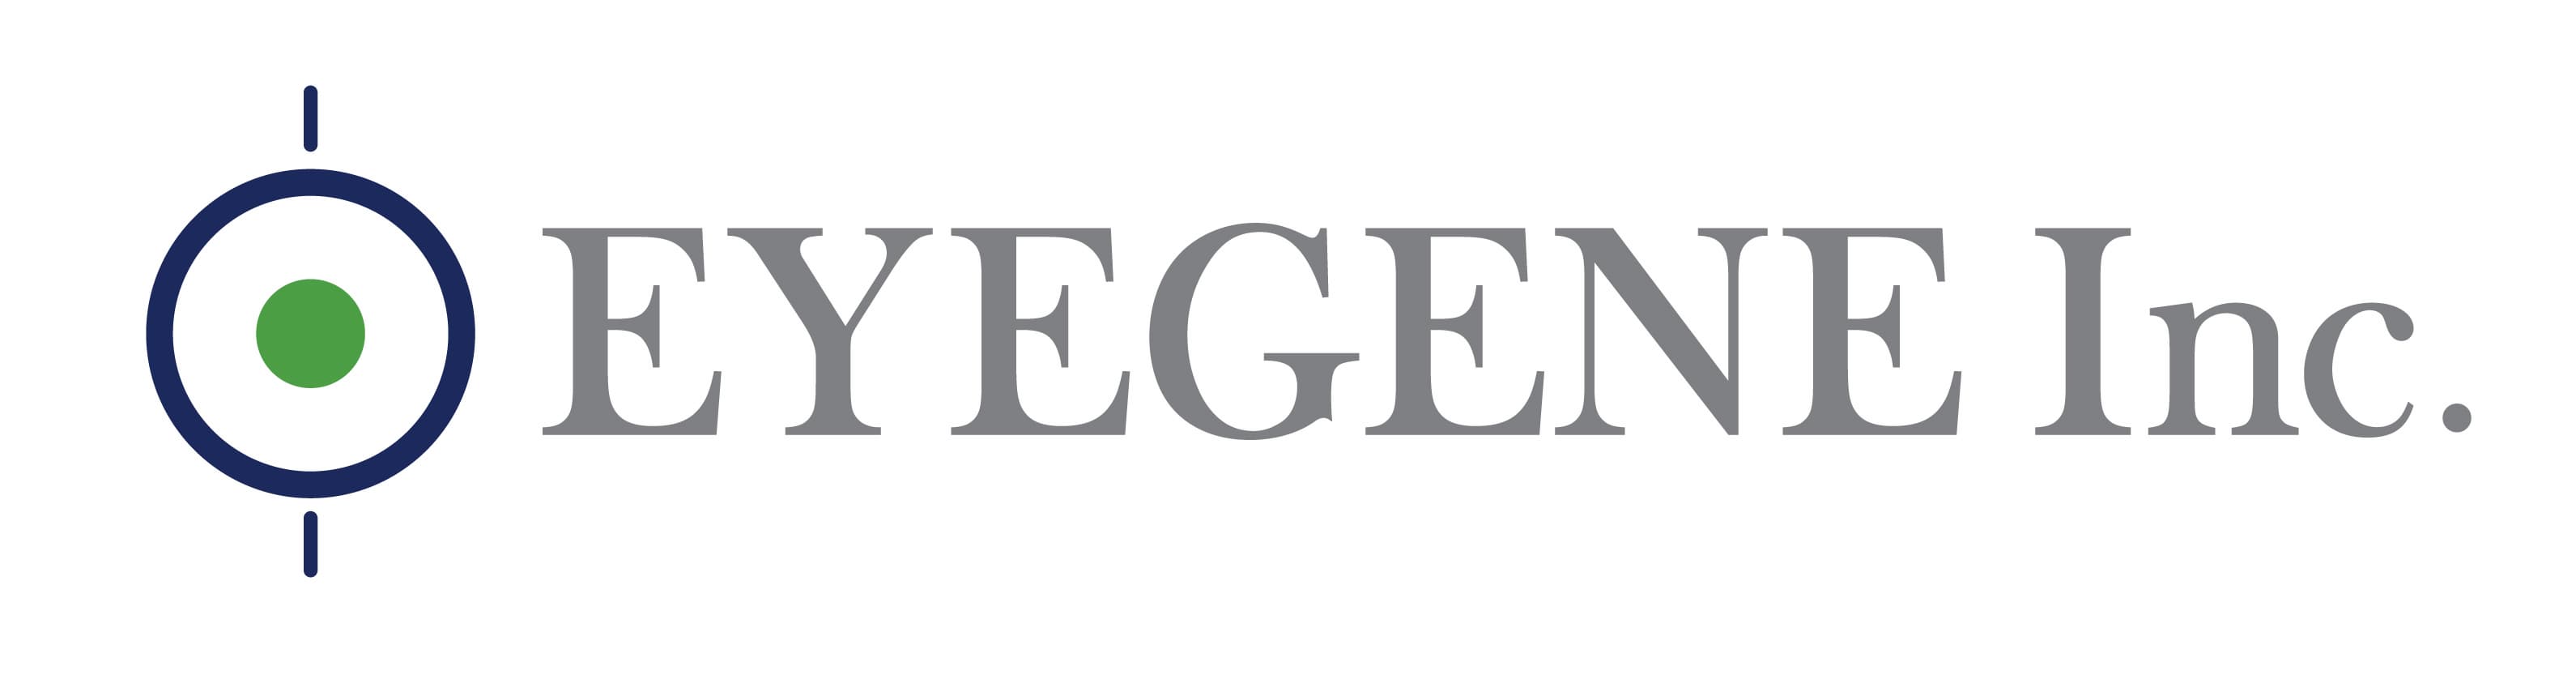 EYEGENE Inc.